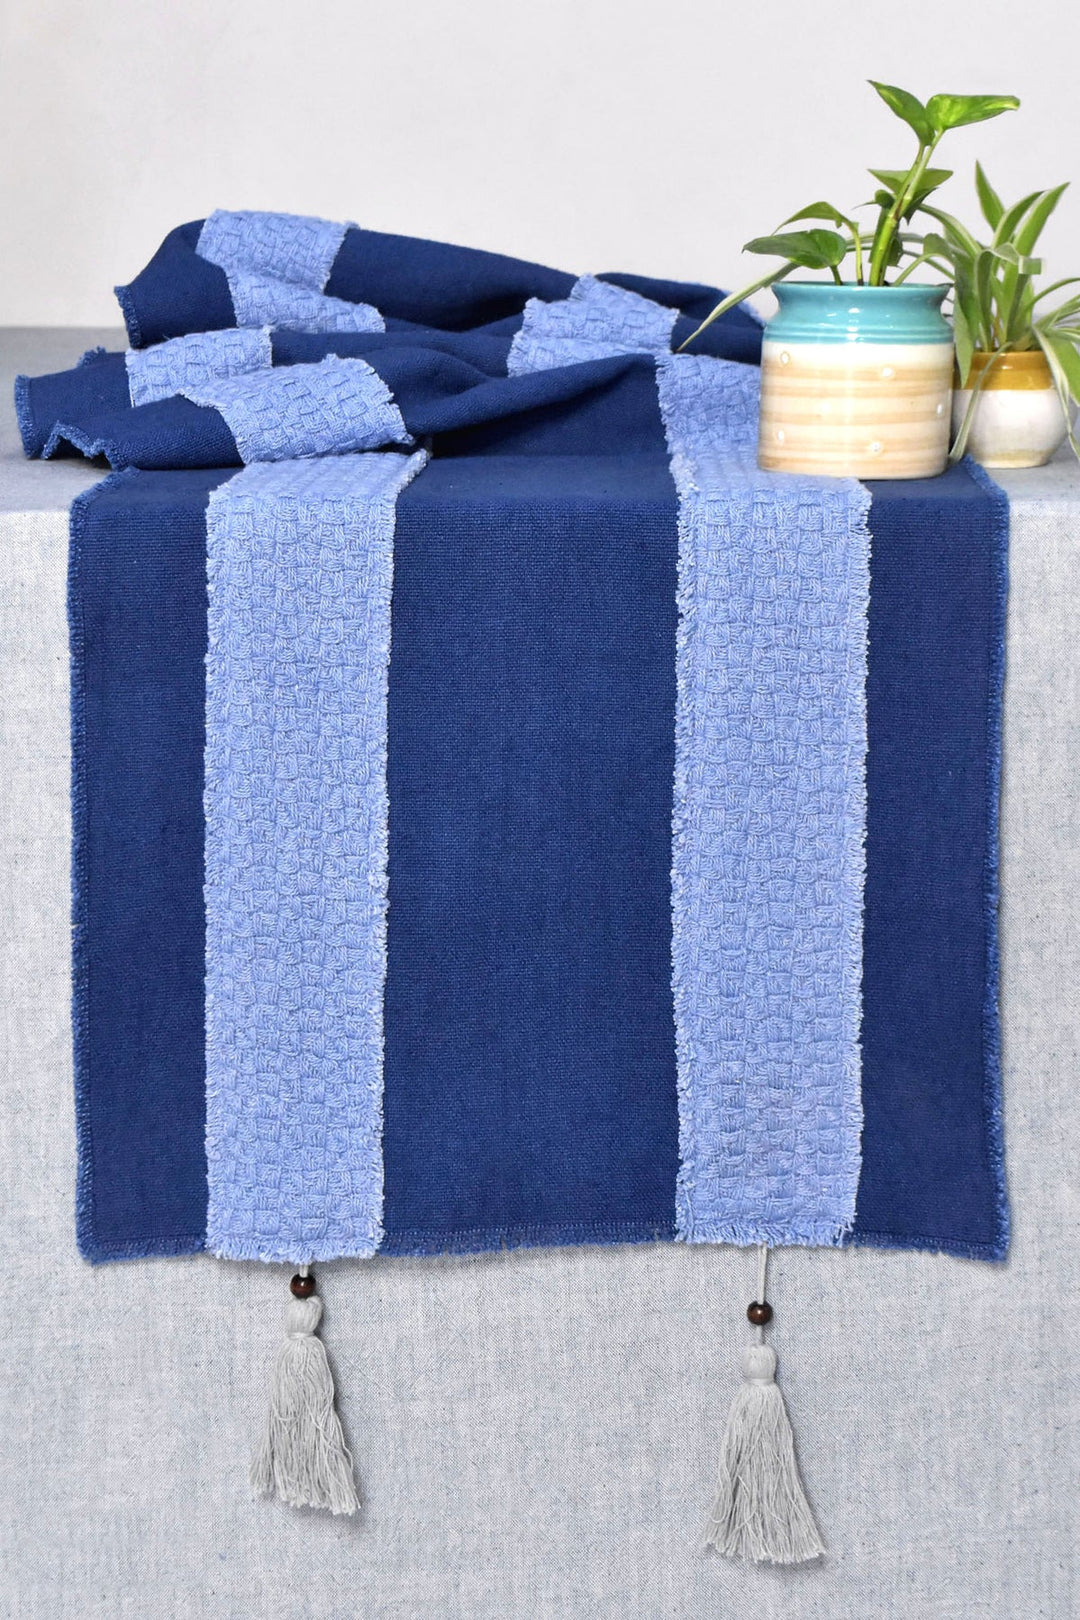 Blue Handwoven Cotton Table Runner - Elegant and Easy to Clean | Aqua - Handwoven Table Runner - Blue